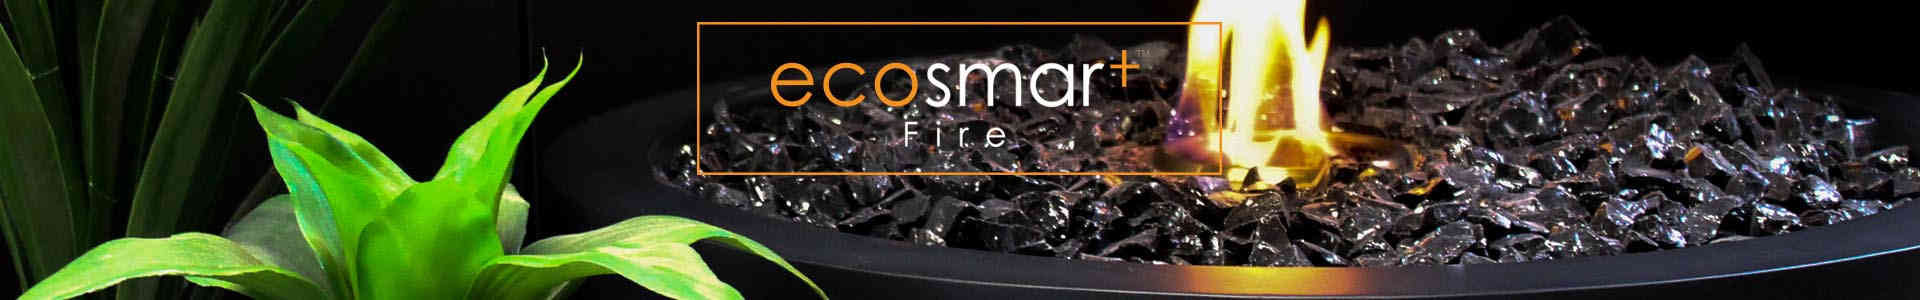 EcoSmart Fire Outdoor Fire Pits & Bowls